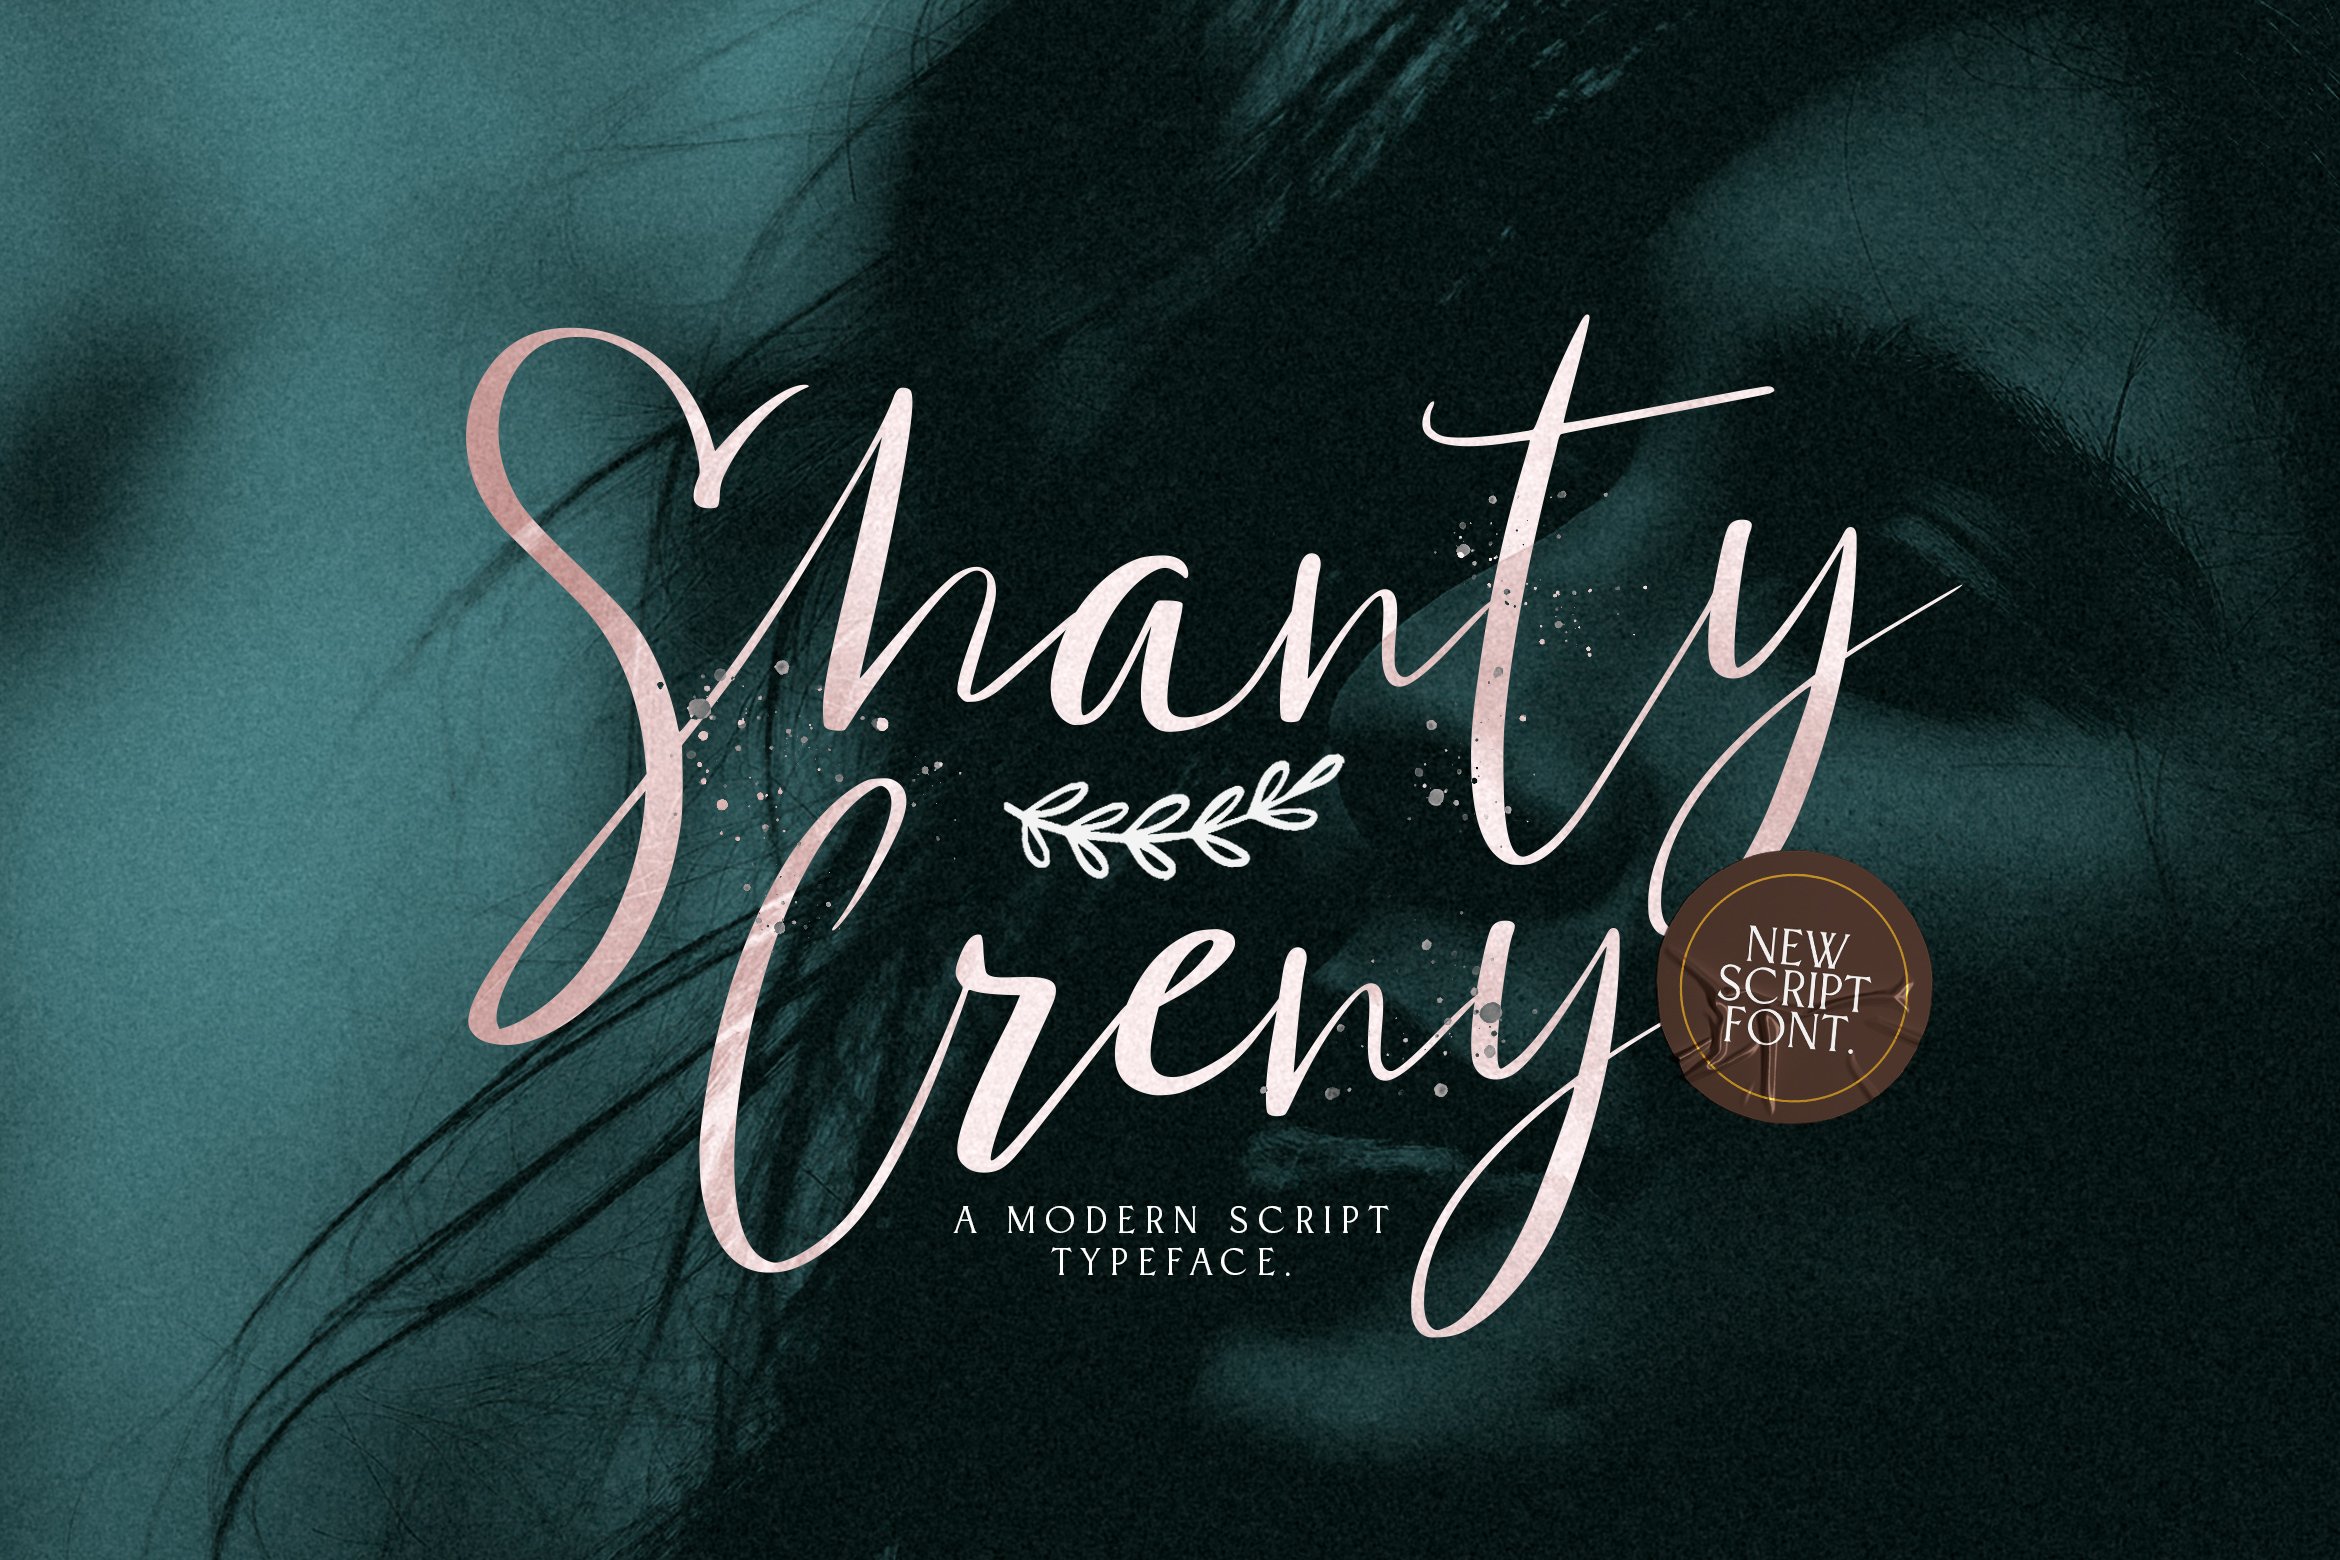 Shanti Creny - Modern Script Font cover image.